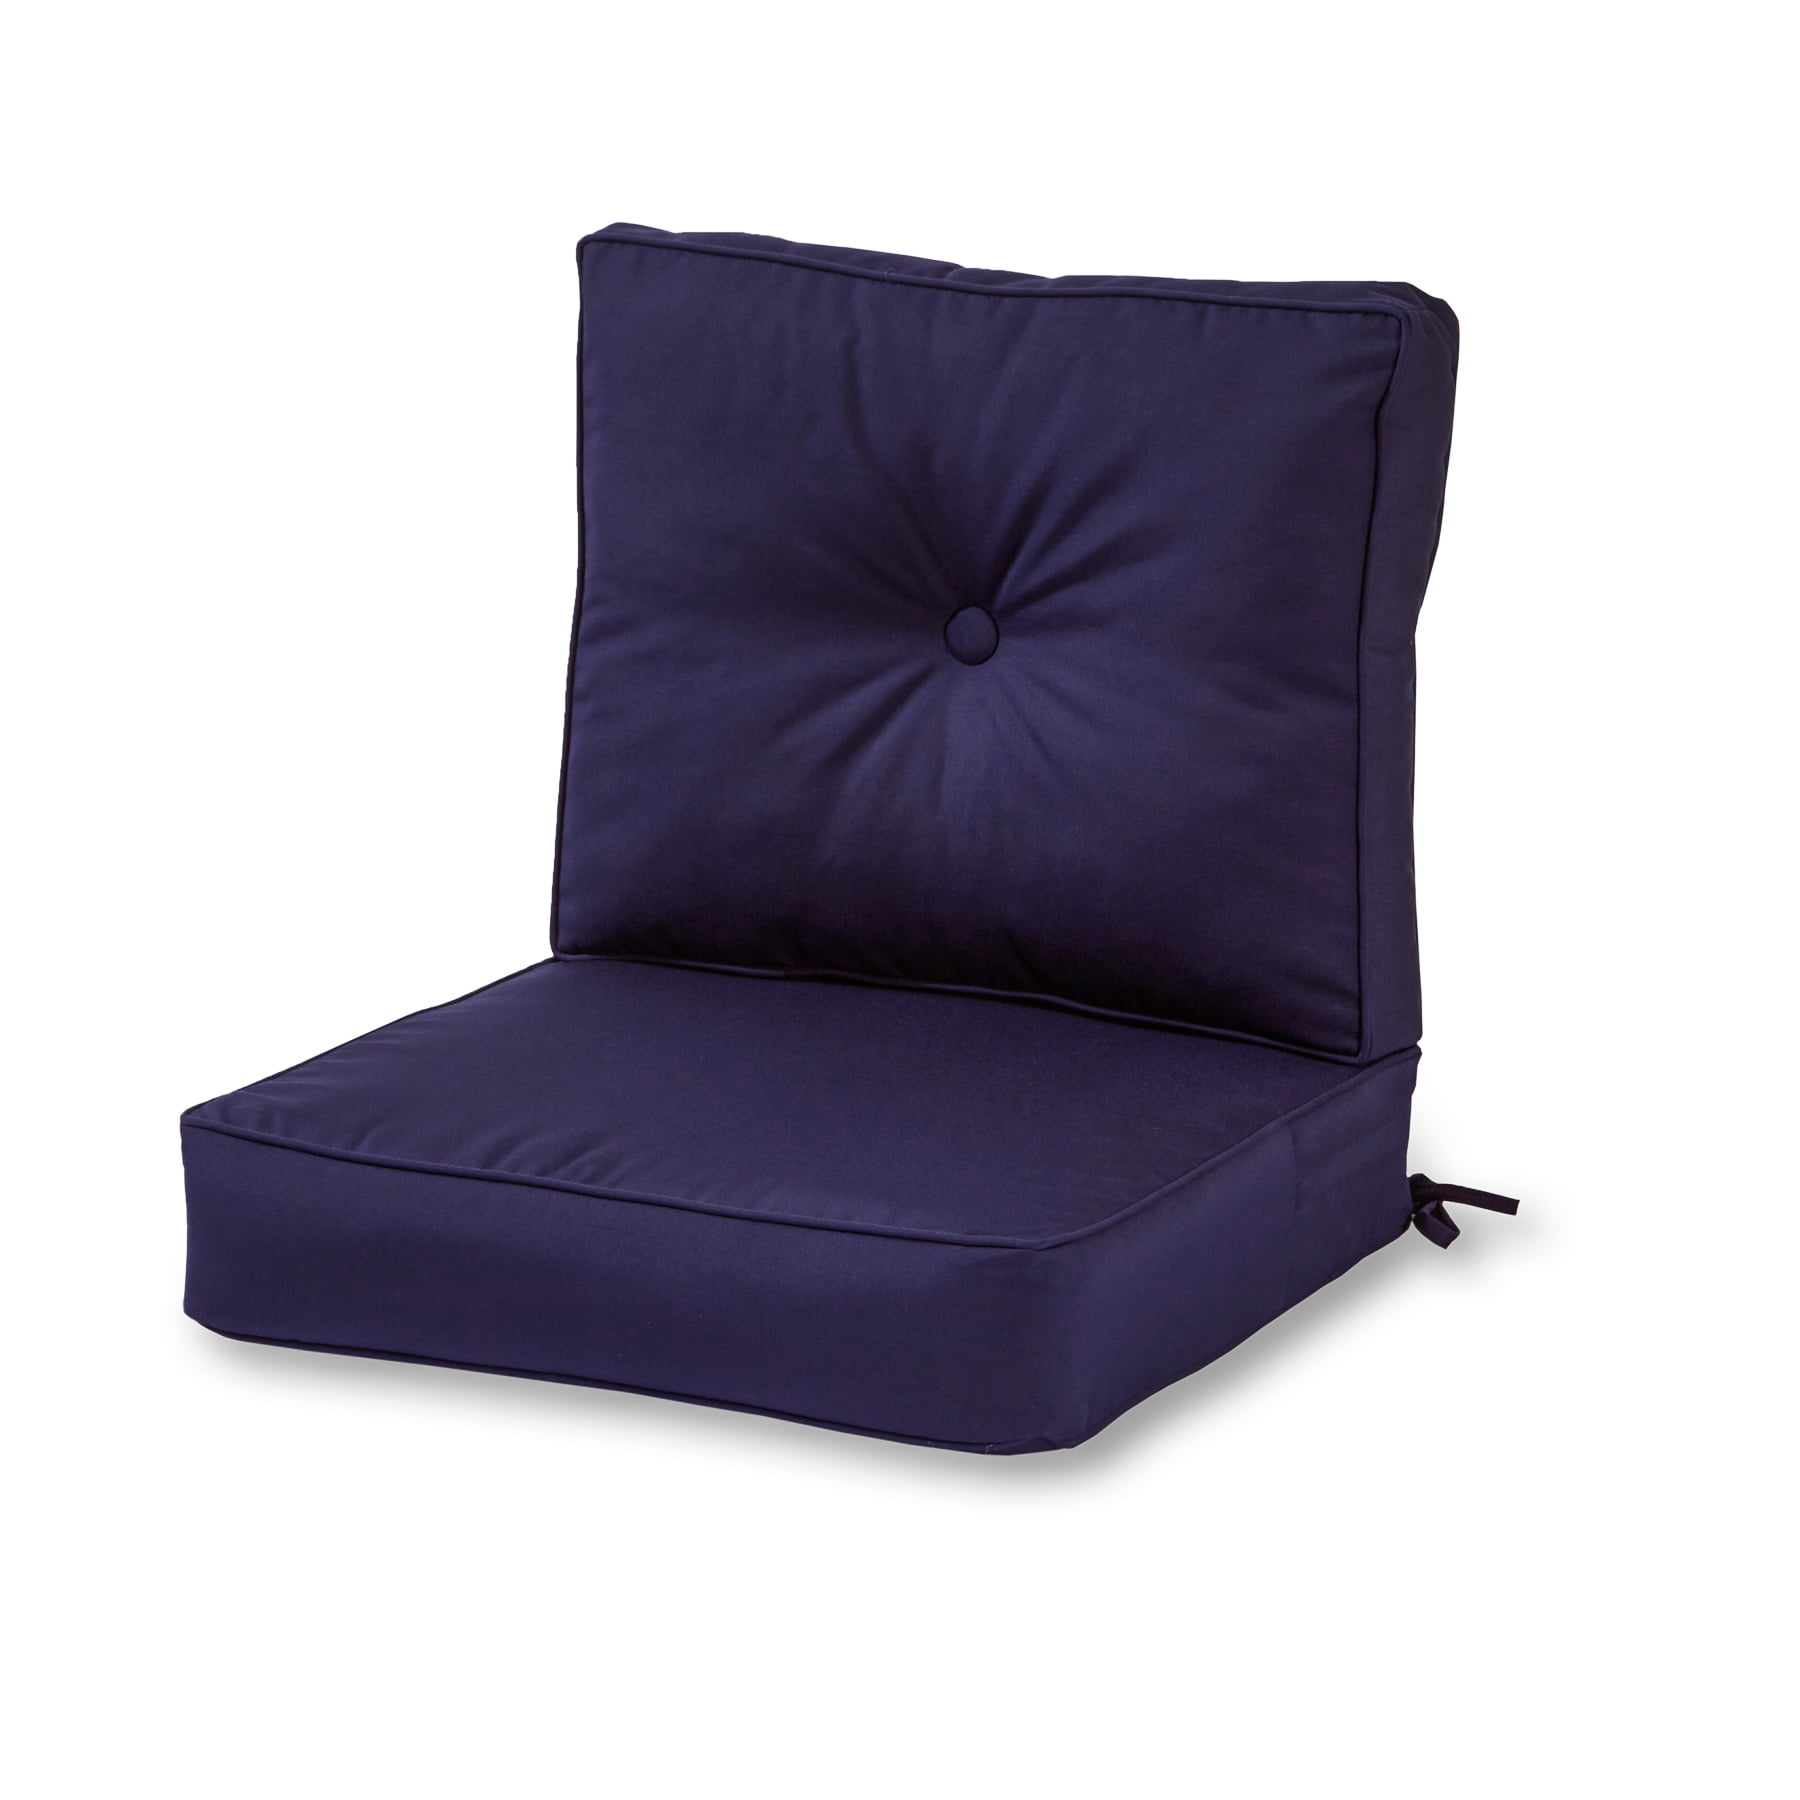 Sunbrella Wheat 2-Piece Deep Seating Outdoor Lounge Chair Cushion Set 